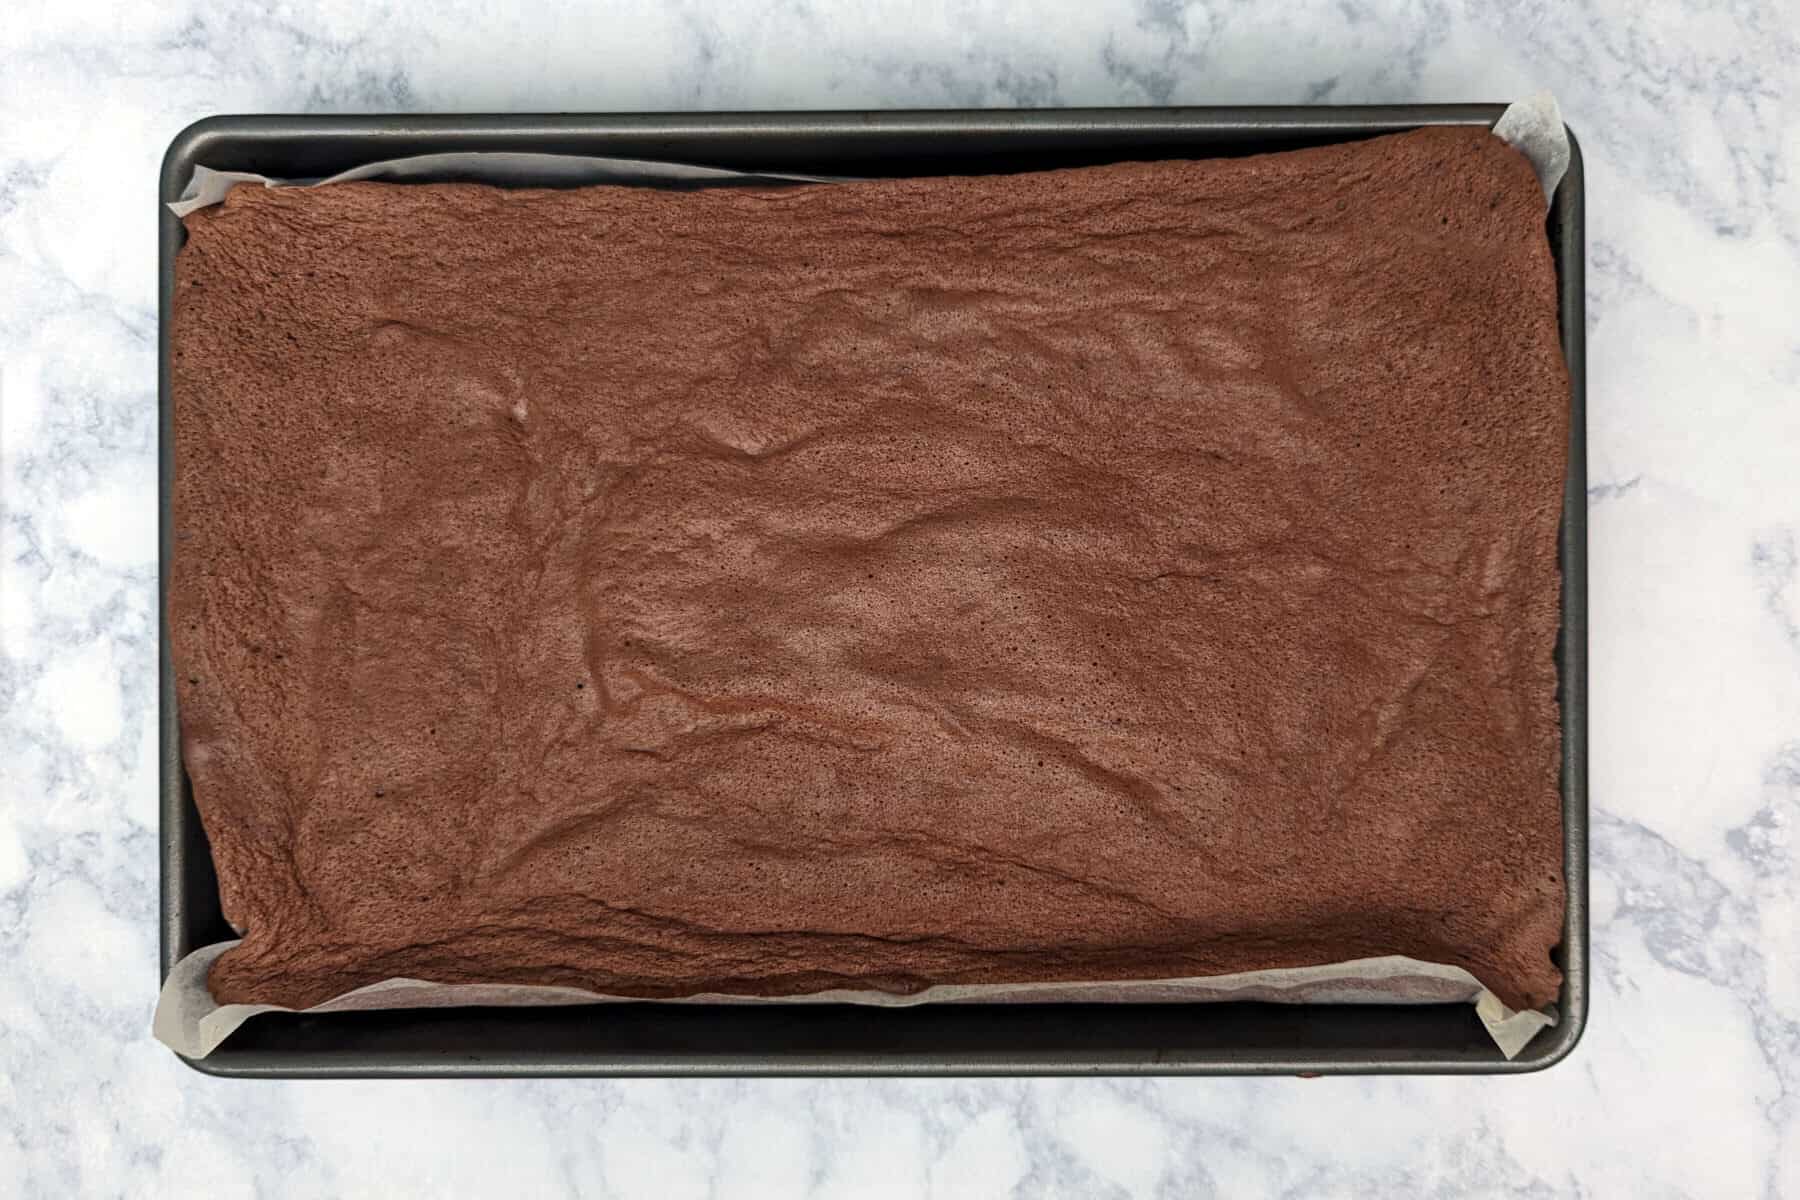 flourless chocolate cake after baking